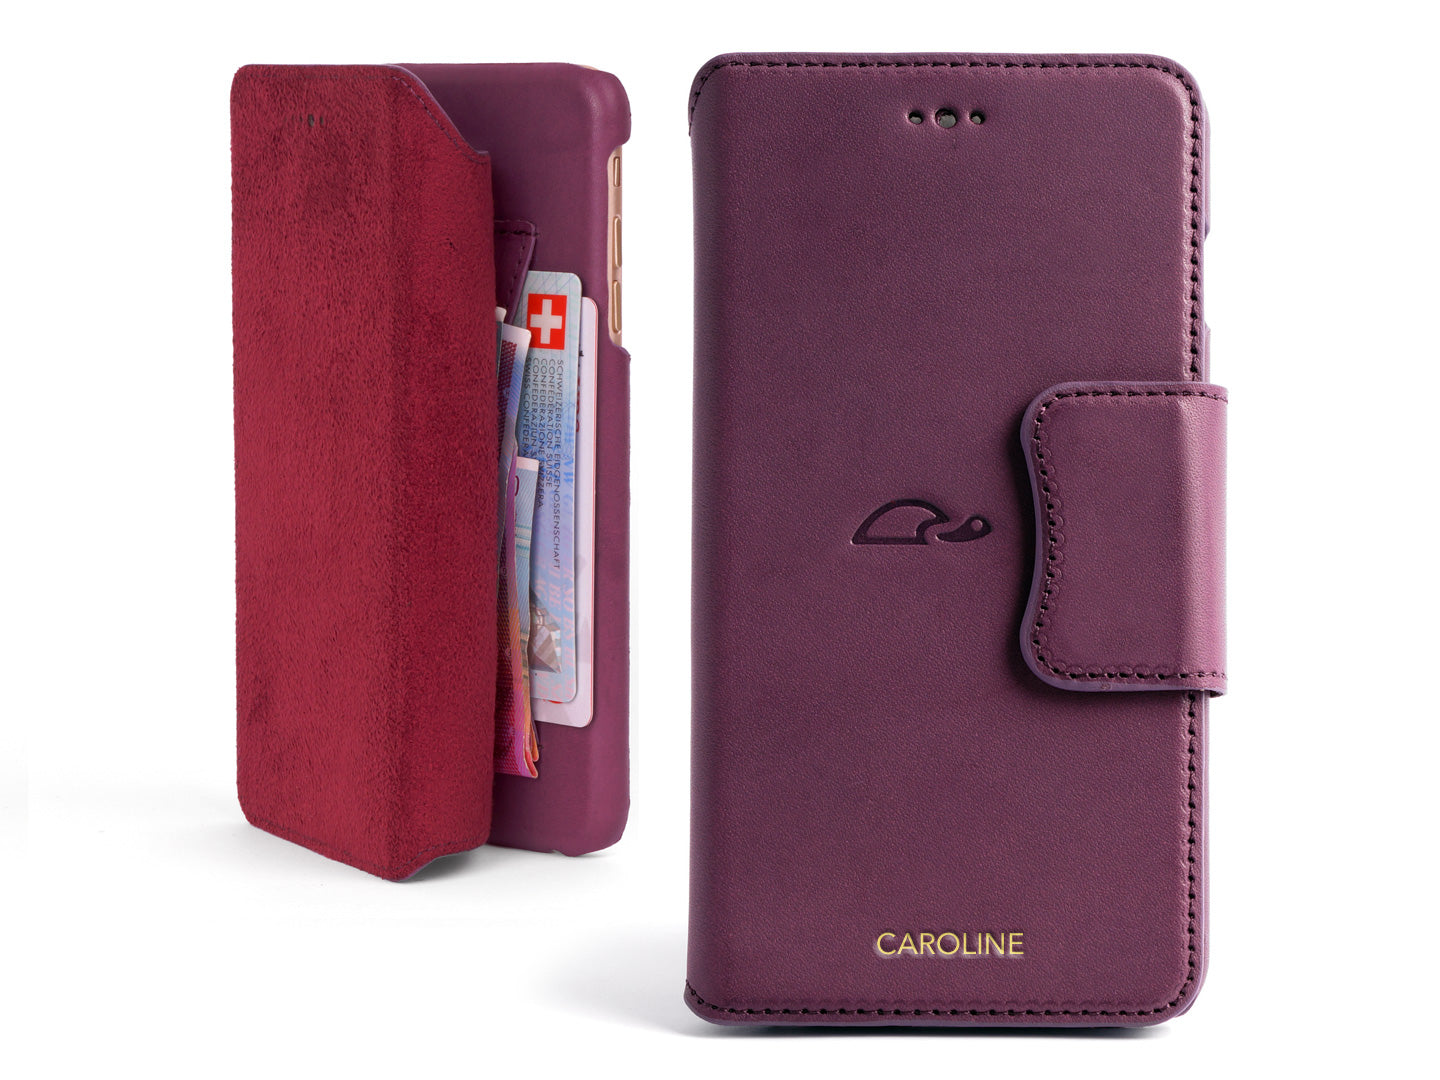 iPhone 6 Plus leather case - purple - wallet case - personalized - Carapaz